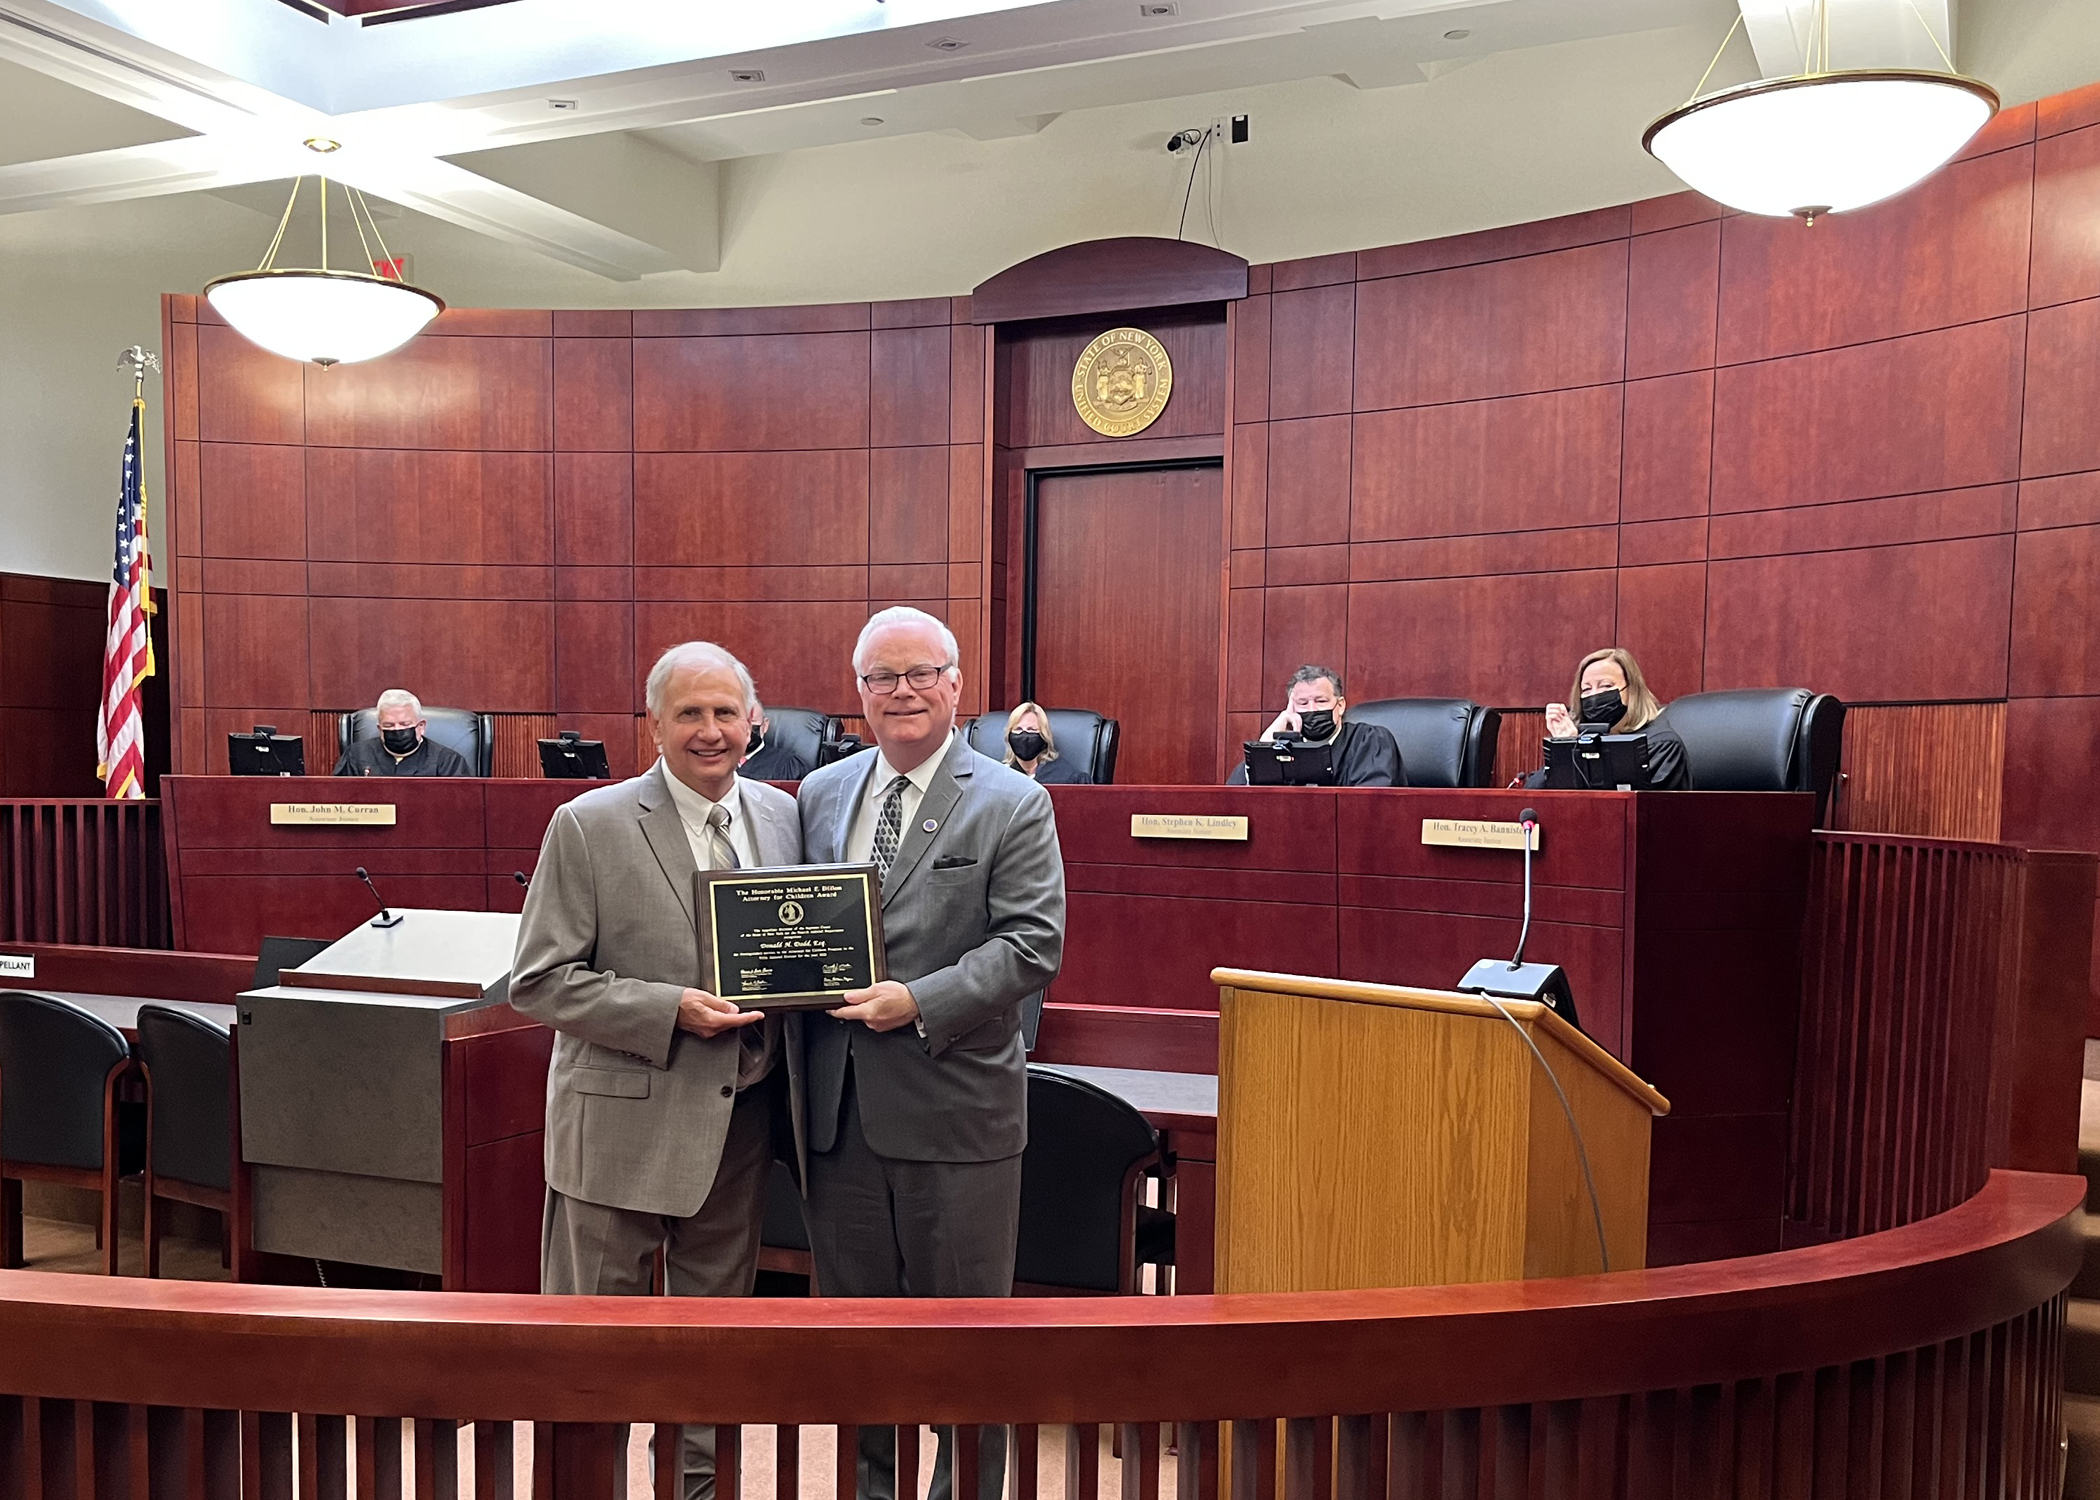 Donald H. Dodd Receives Award